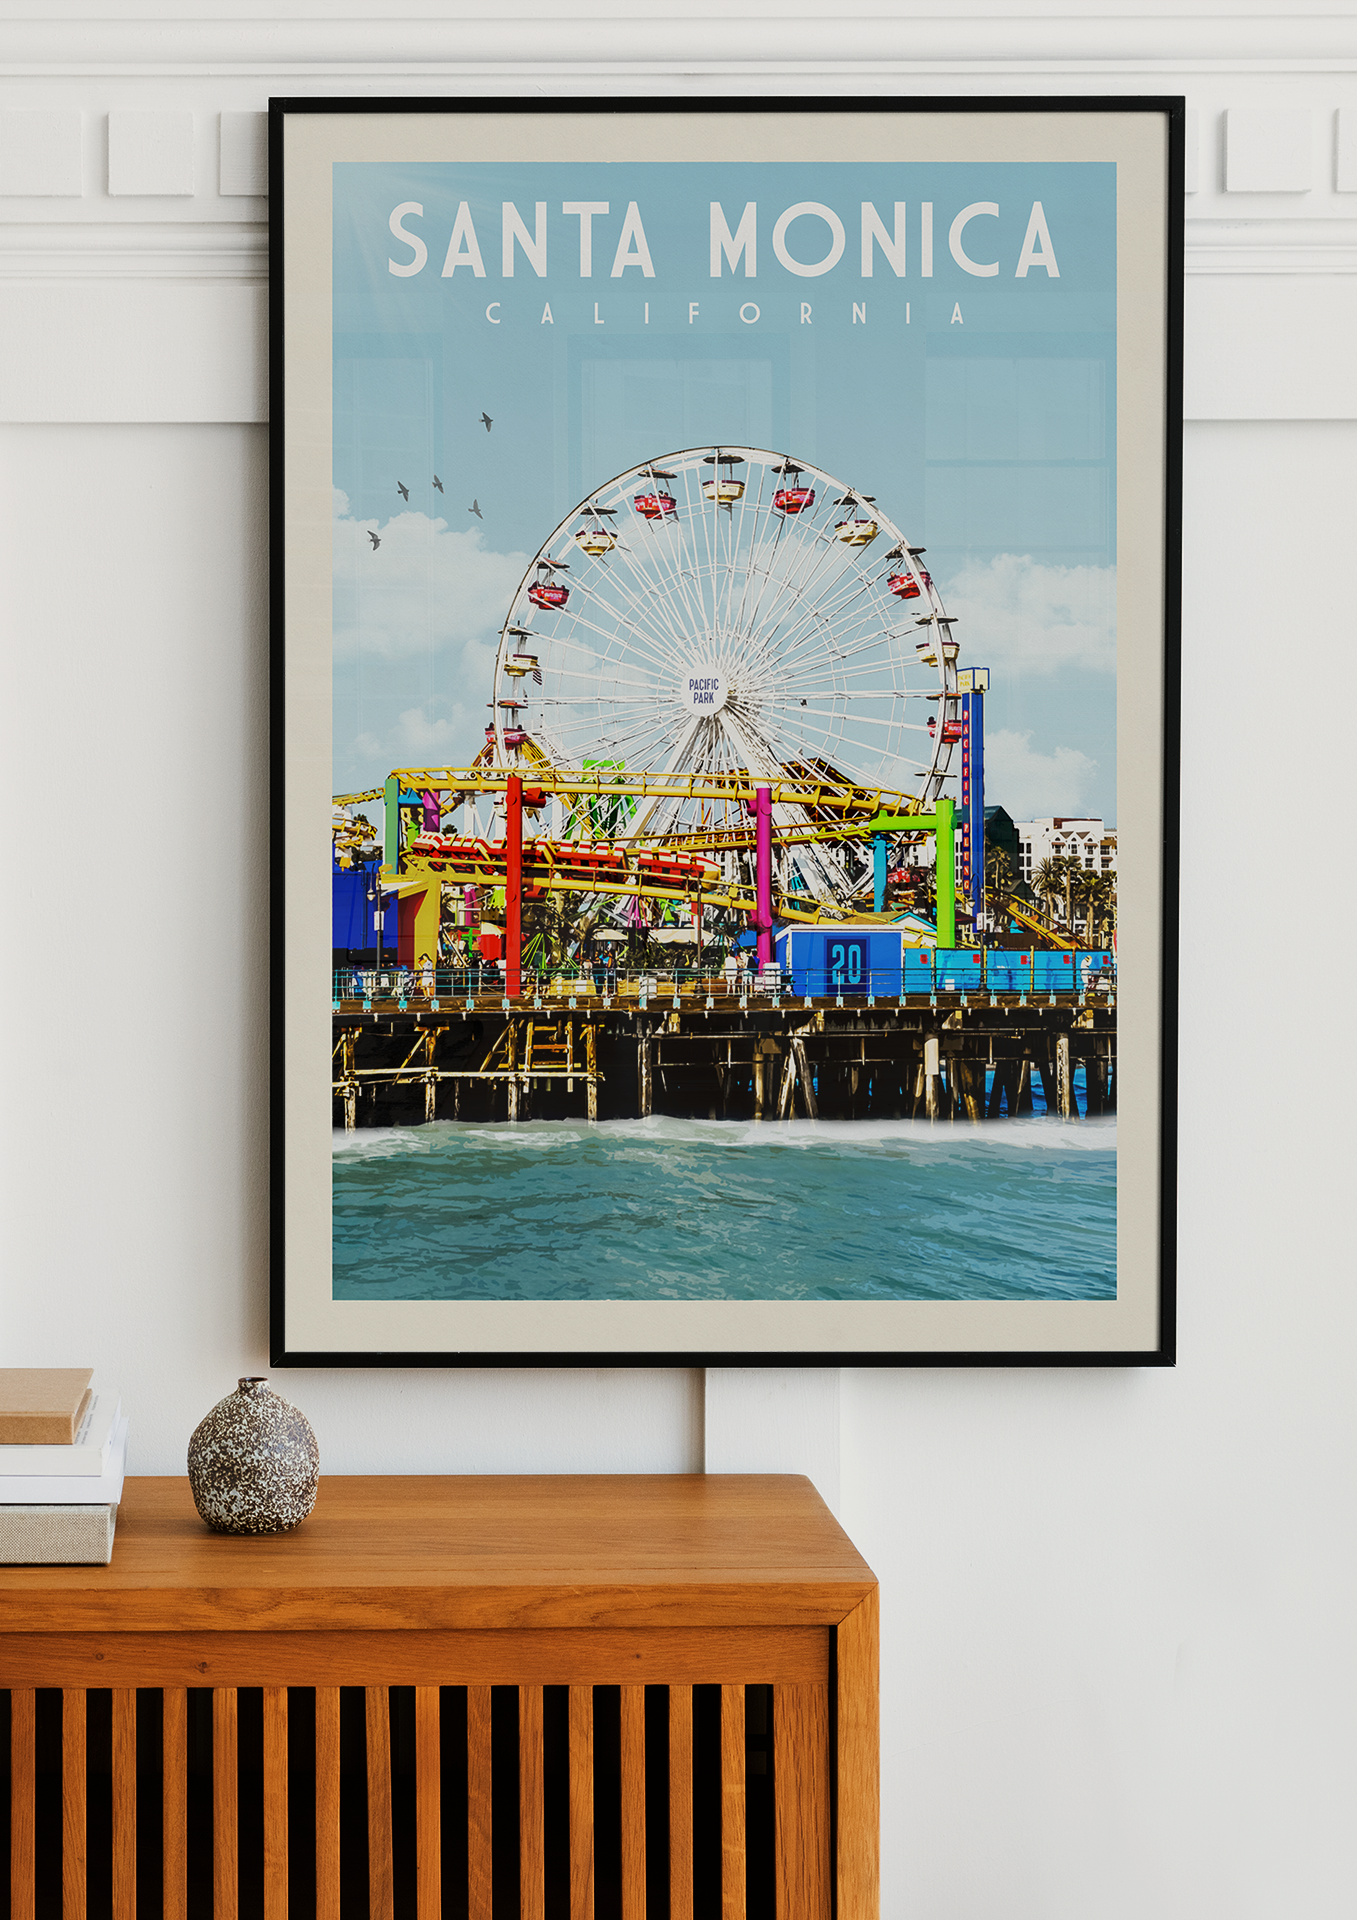 Santa Monica, California - Vintage Travel Poster